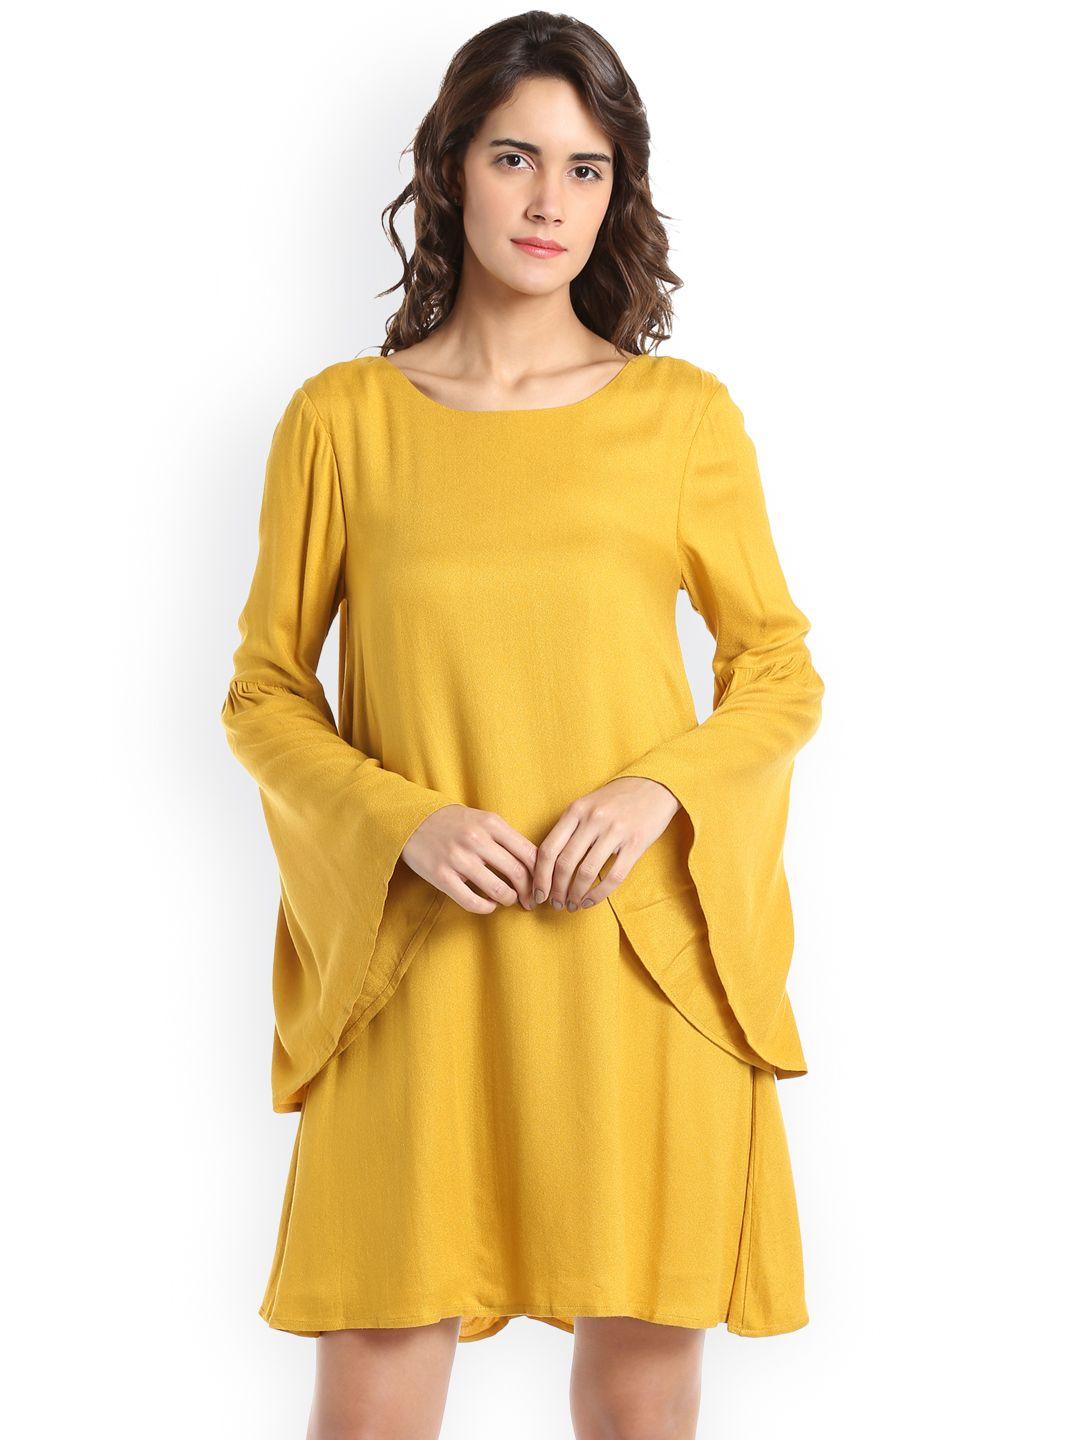 vero moda women mustard yellow solid sheath dress